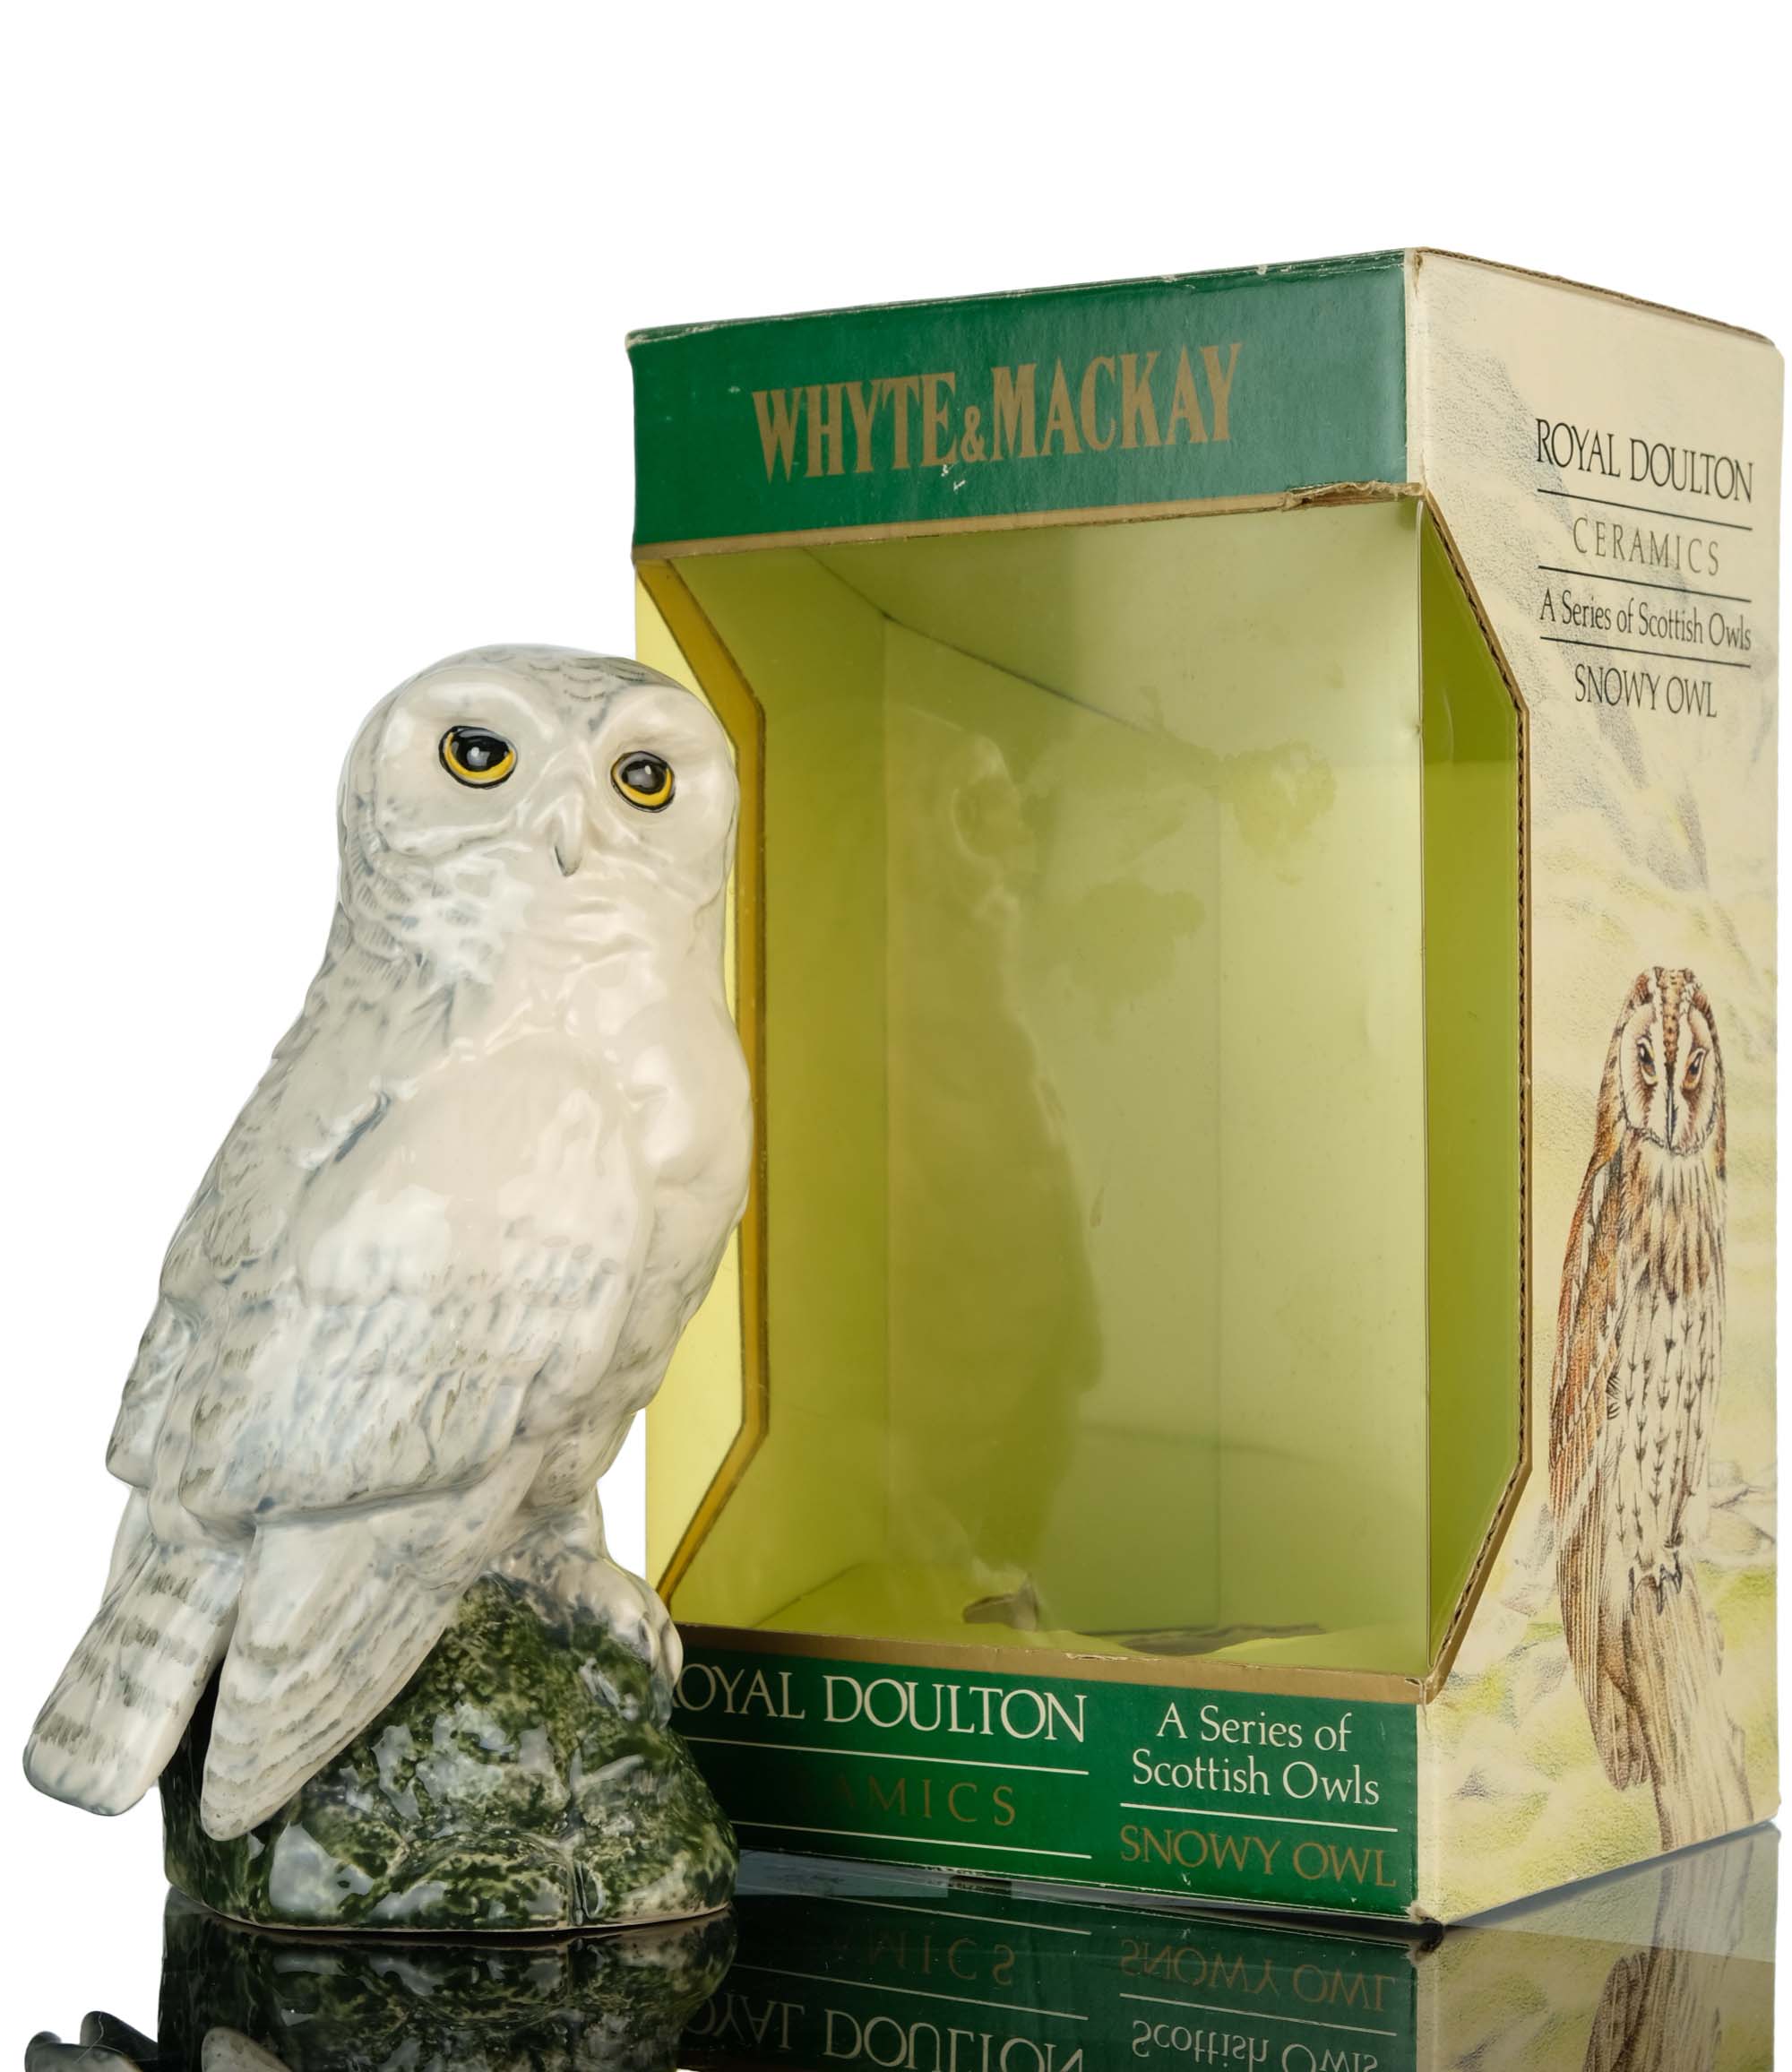 Whyte & Mackay Royal Doulton Ceramic Snowy Owl